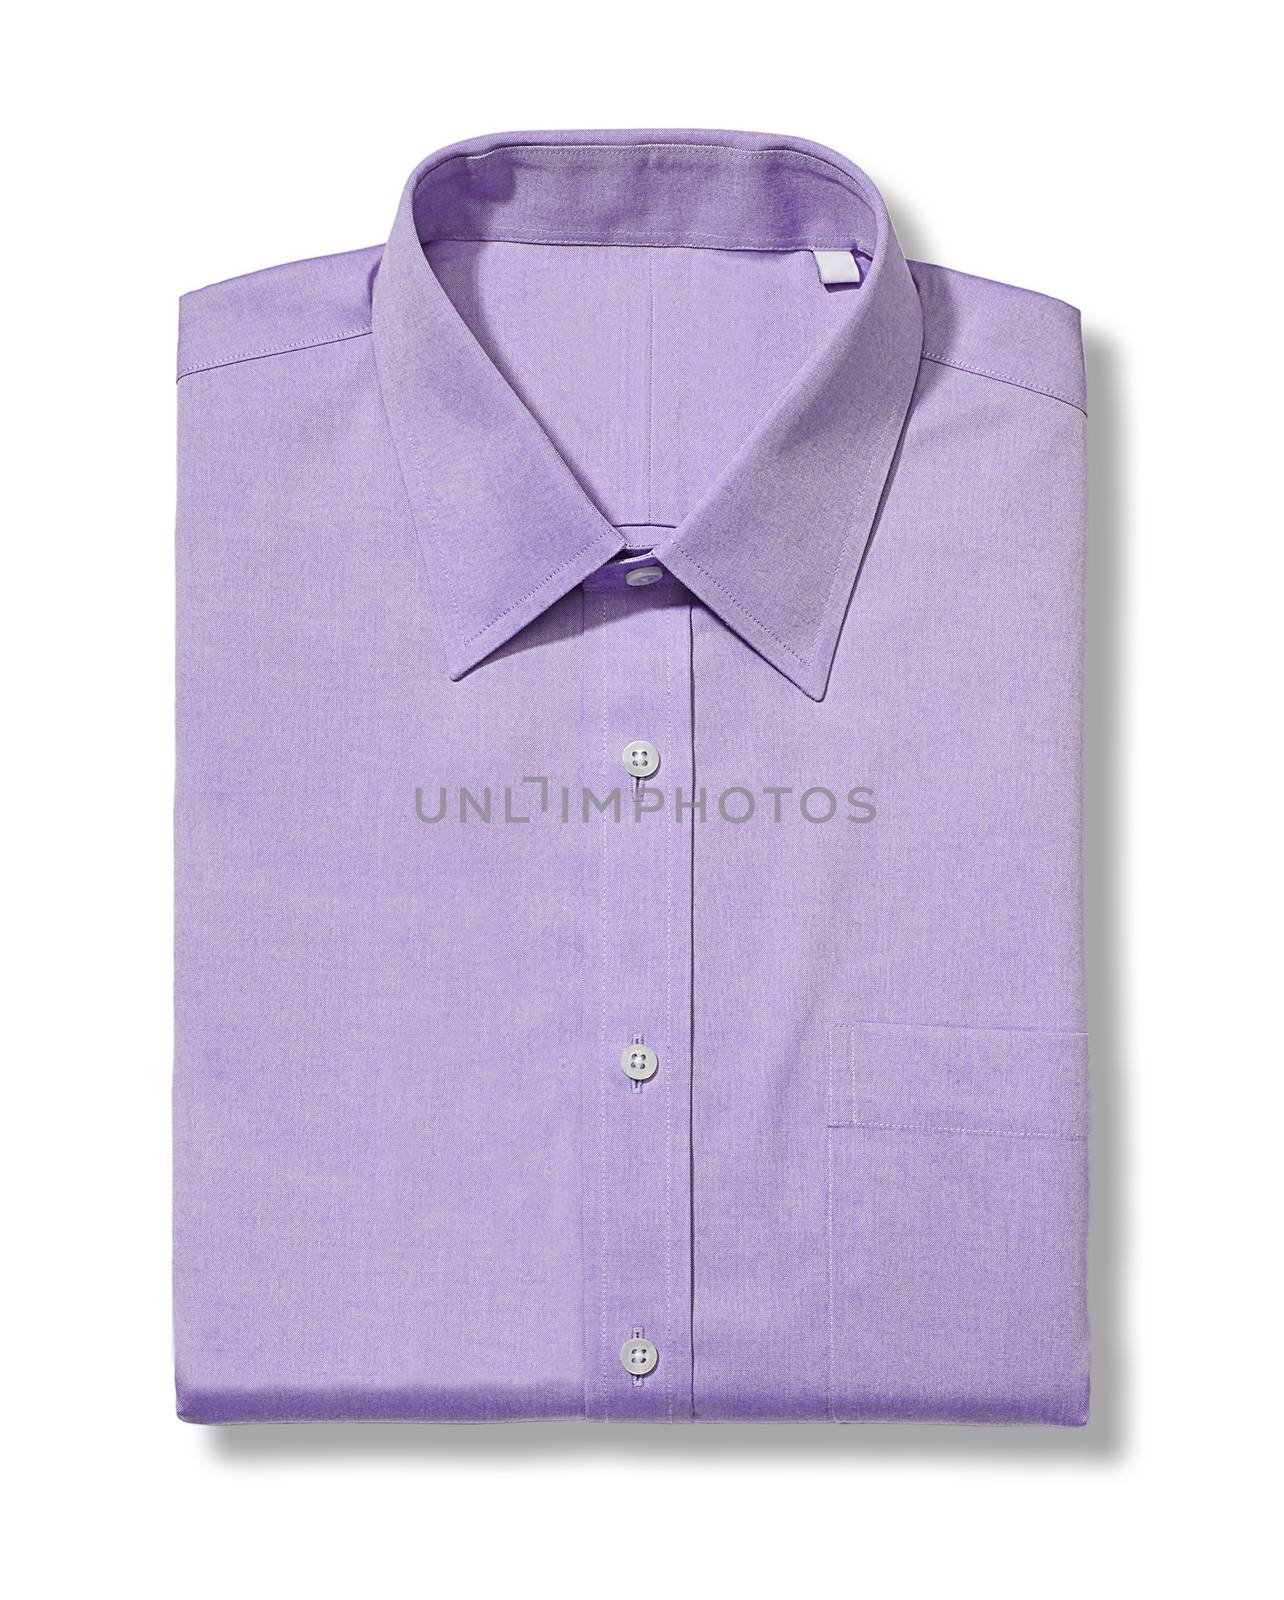 classic long sleeve violet shirt by ozaiachin